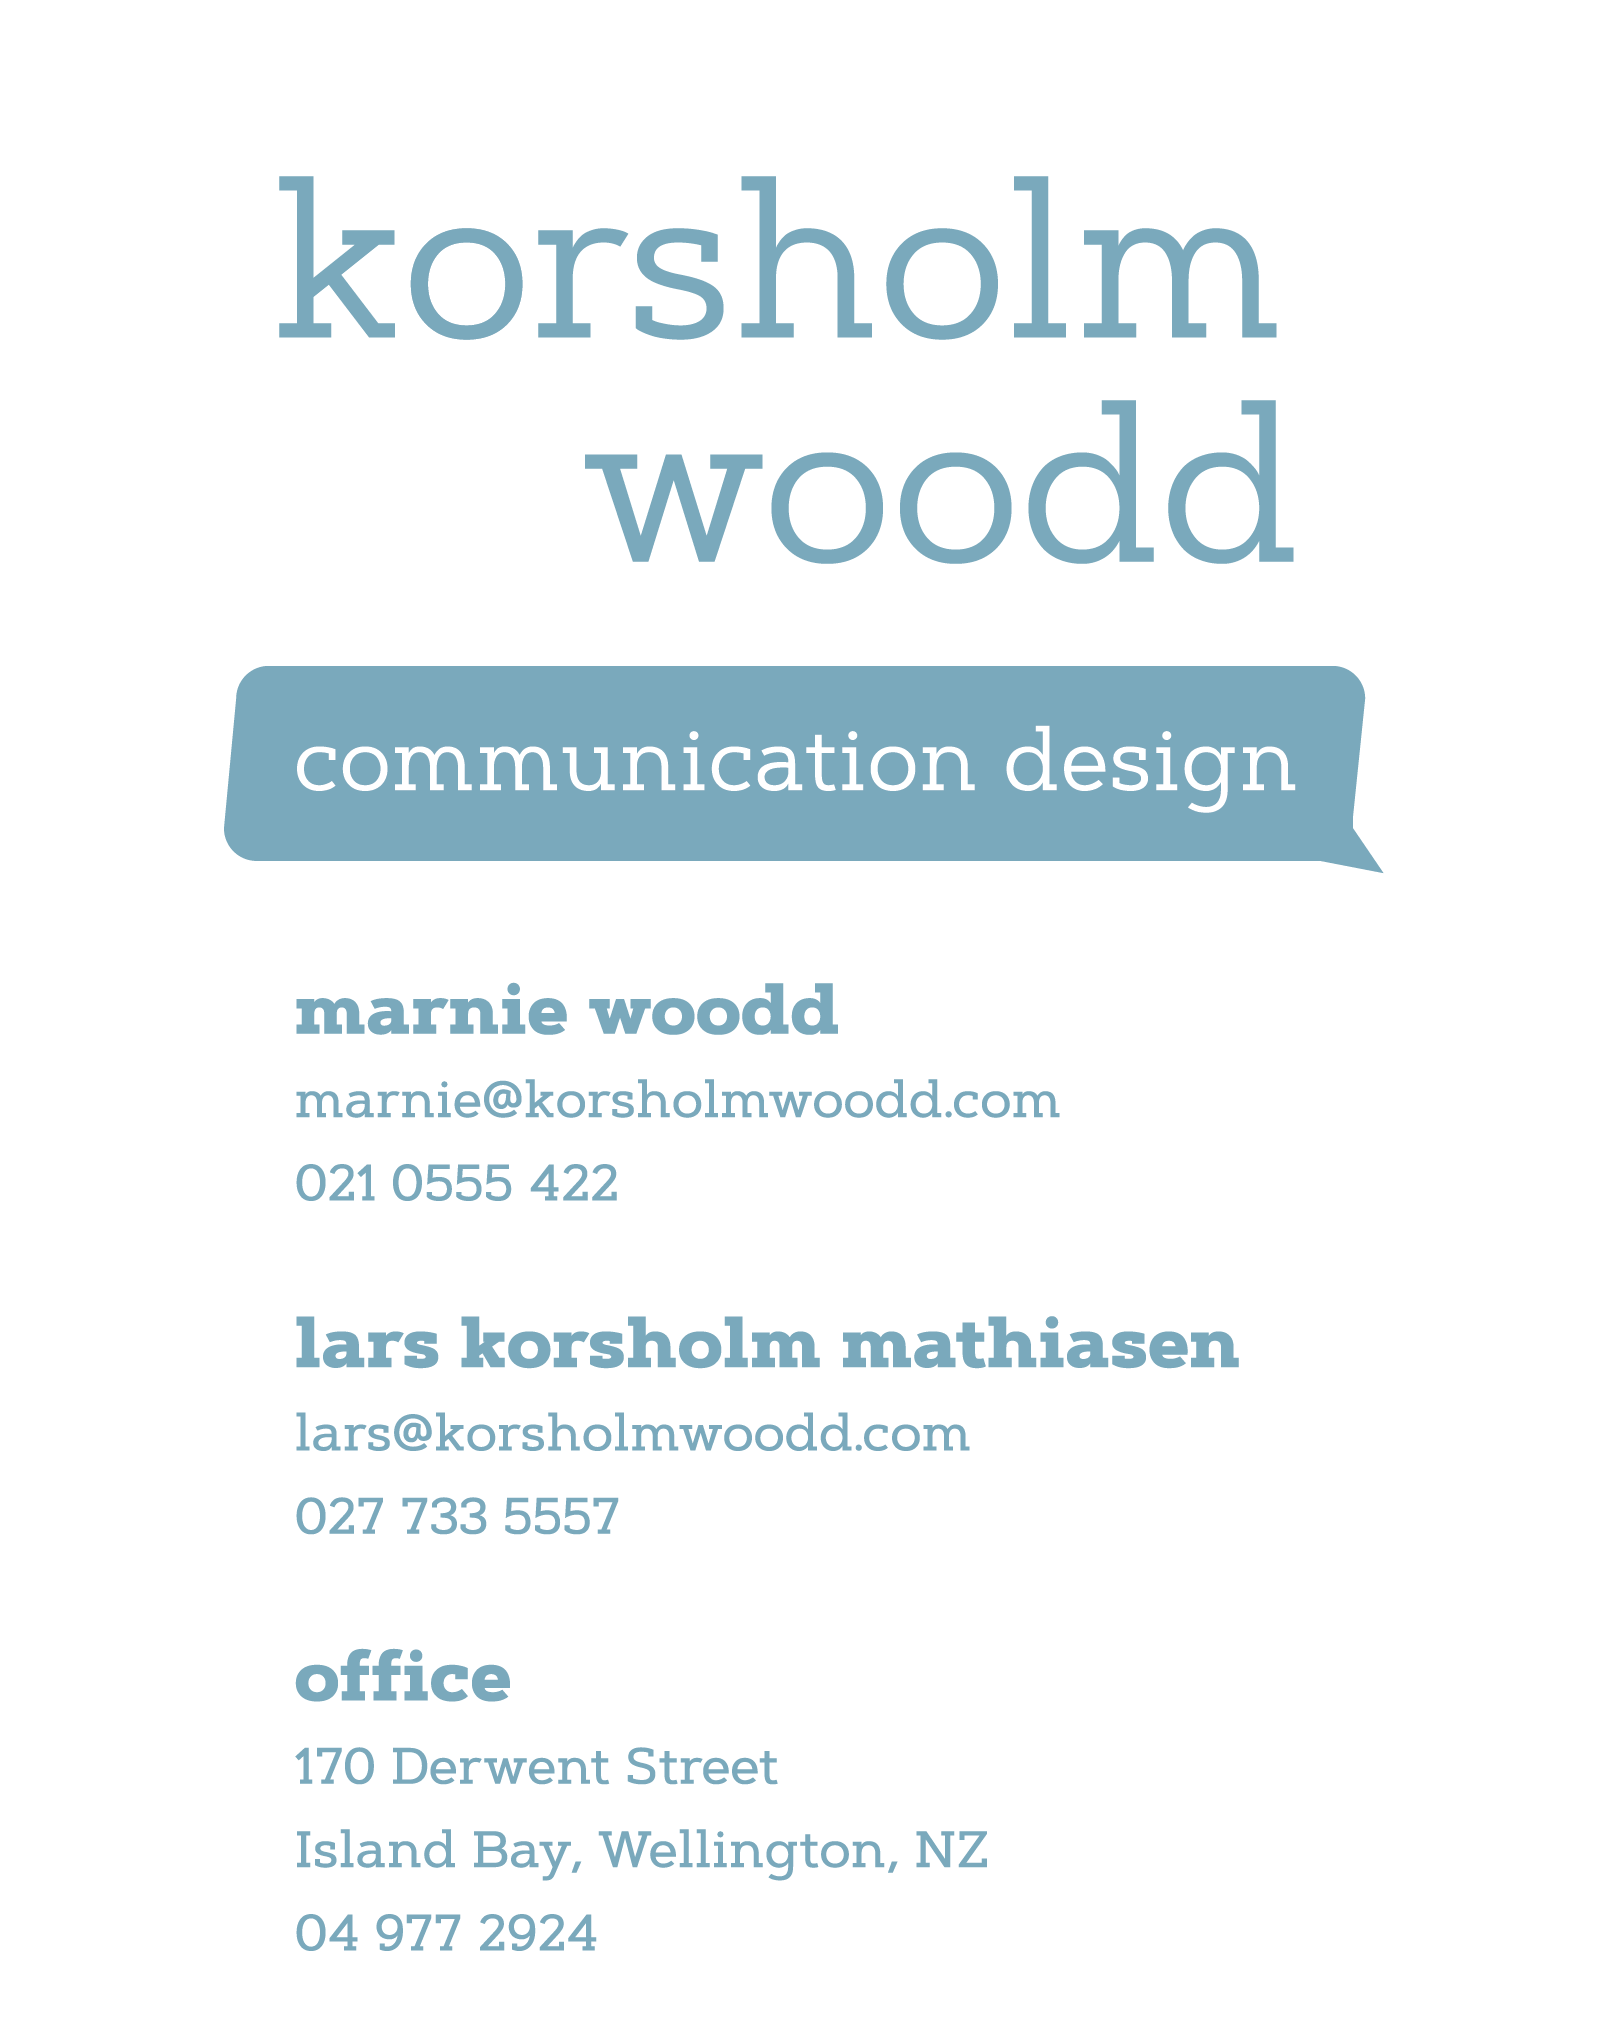 Korsholm Woodd Ltd